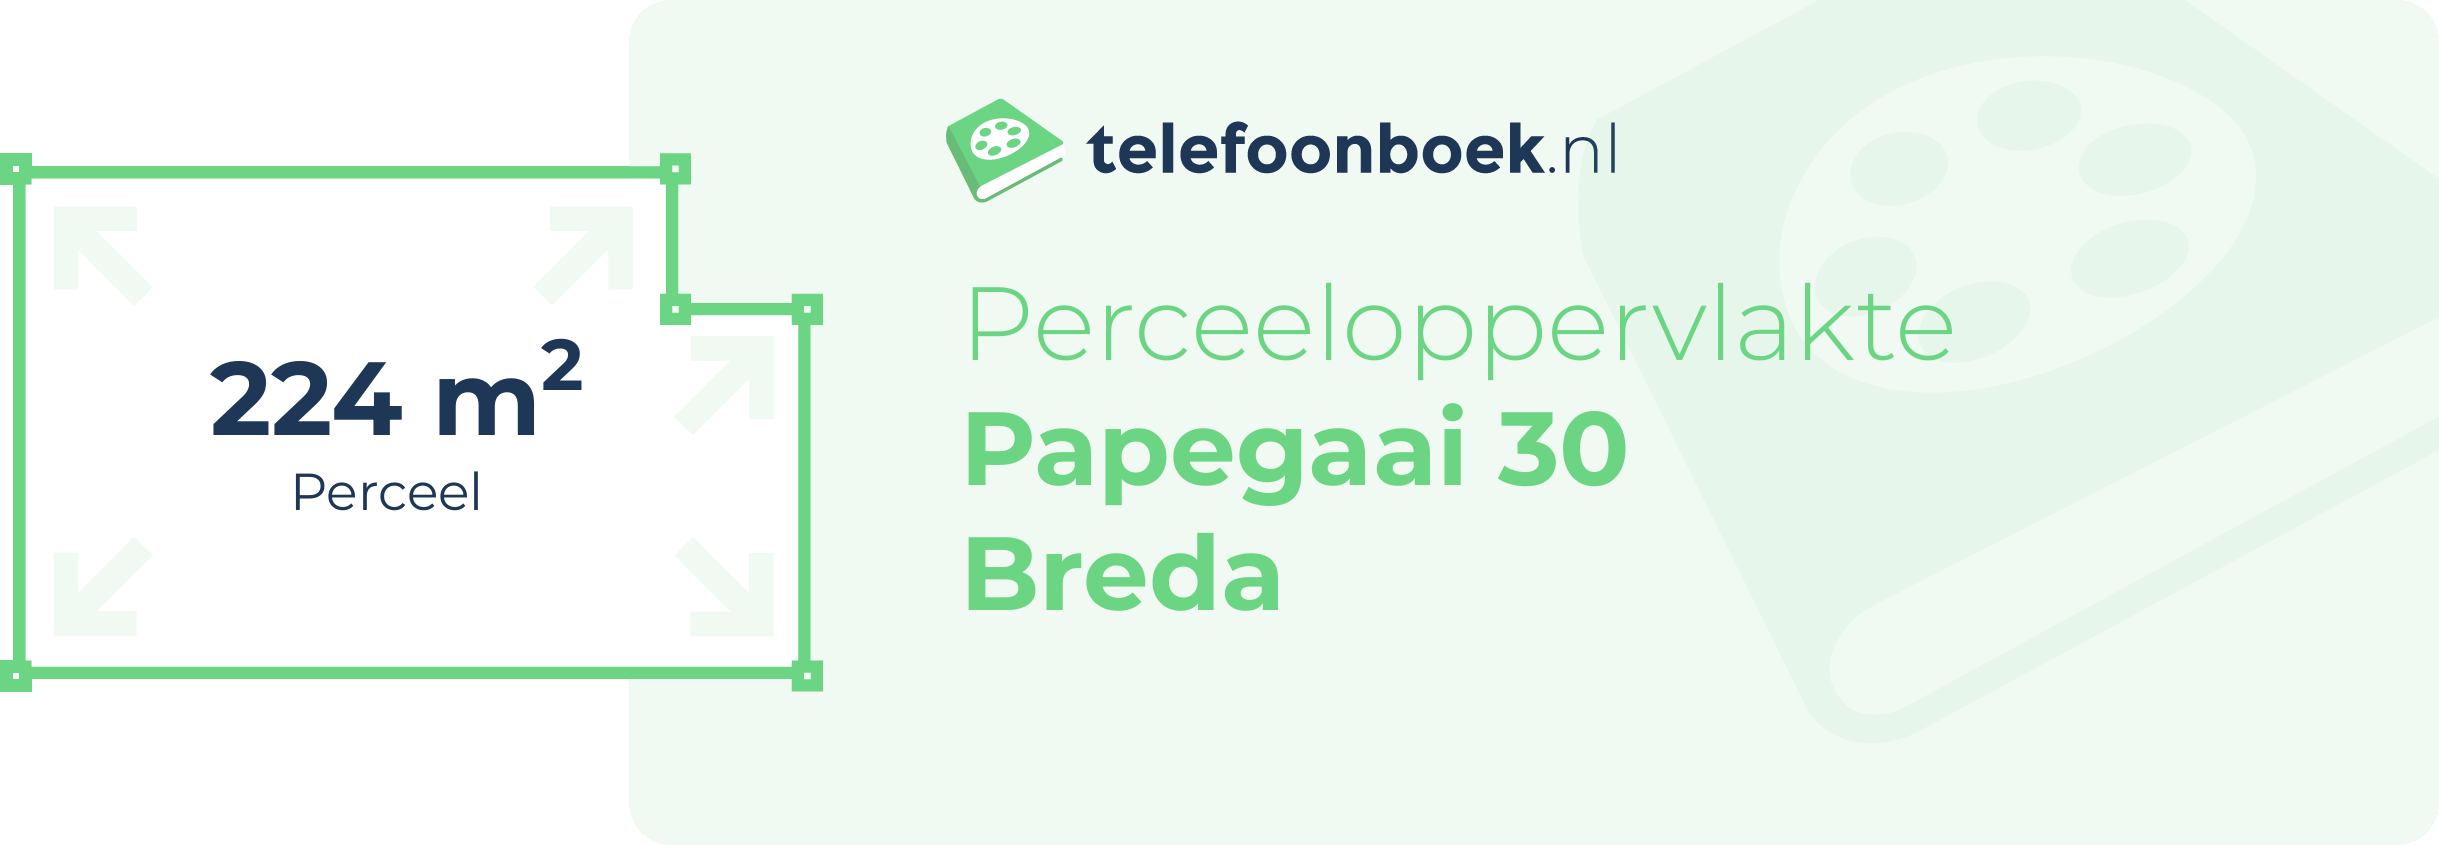 Perceeloppervlakte Papegaai 30 Breda